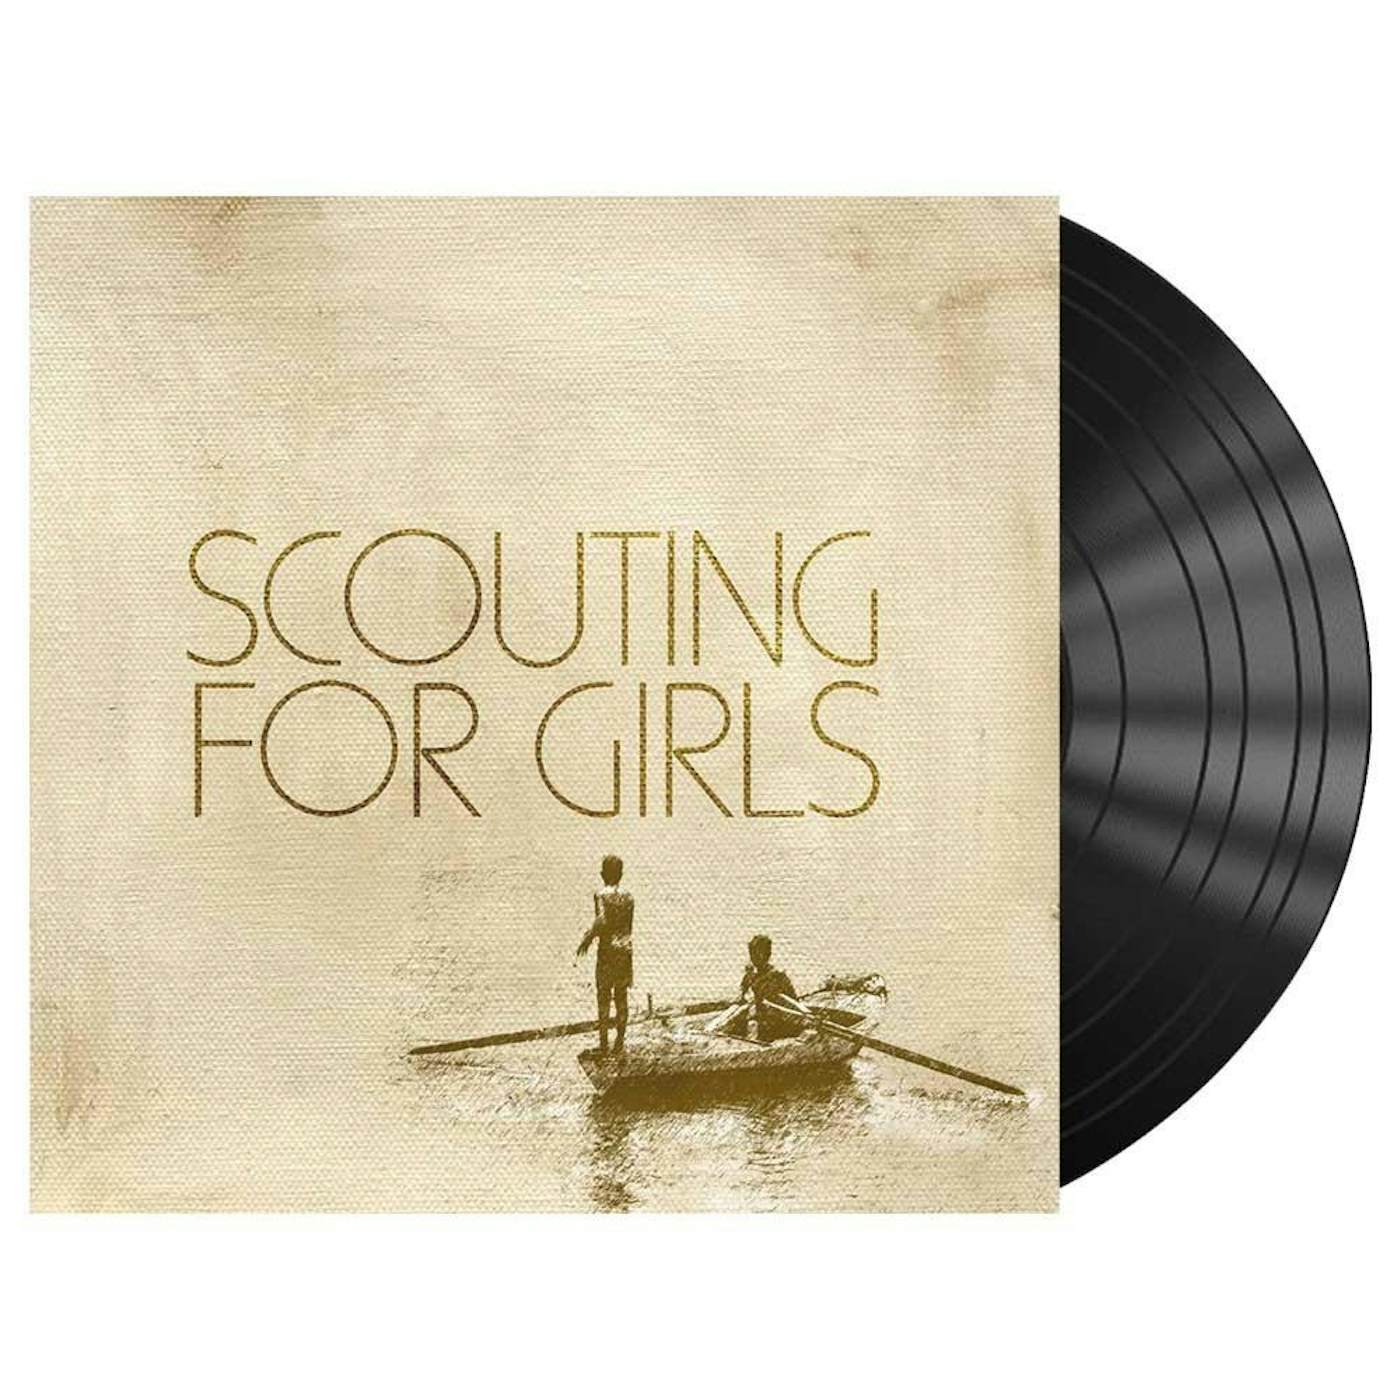 SCOUTING FOR GIRLS - LP (Vinyl)